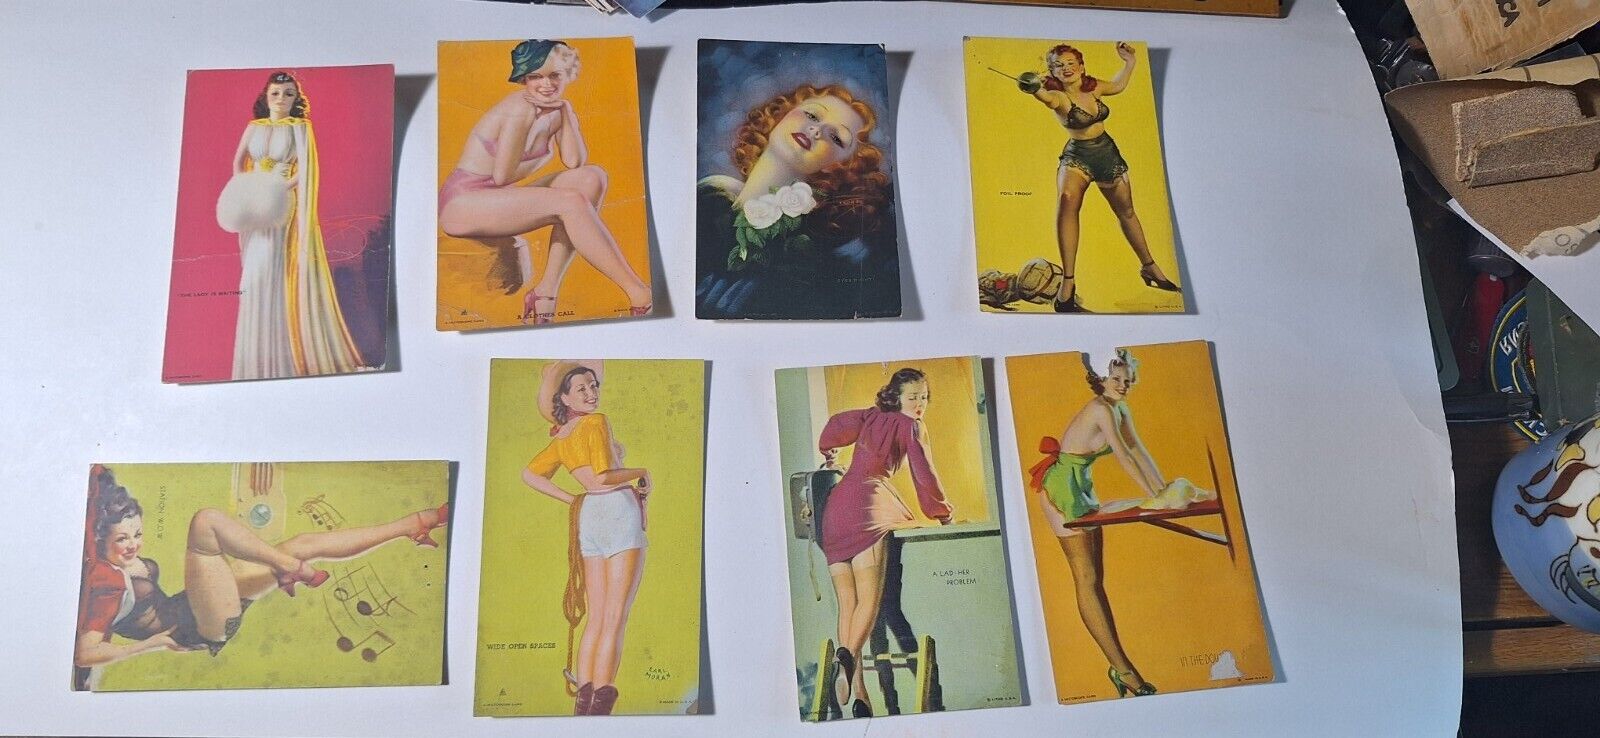 Vintage Mutoscope Arcade Cards Glamor Girl Series 1940 Lot of 8 - E. Moran